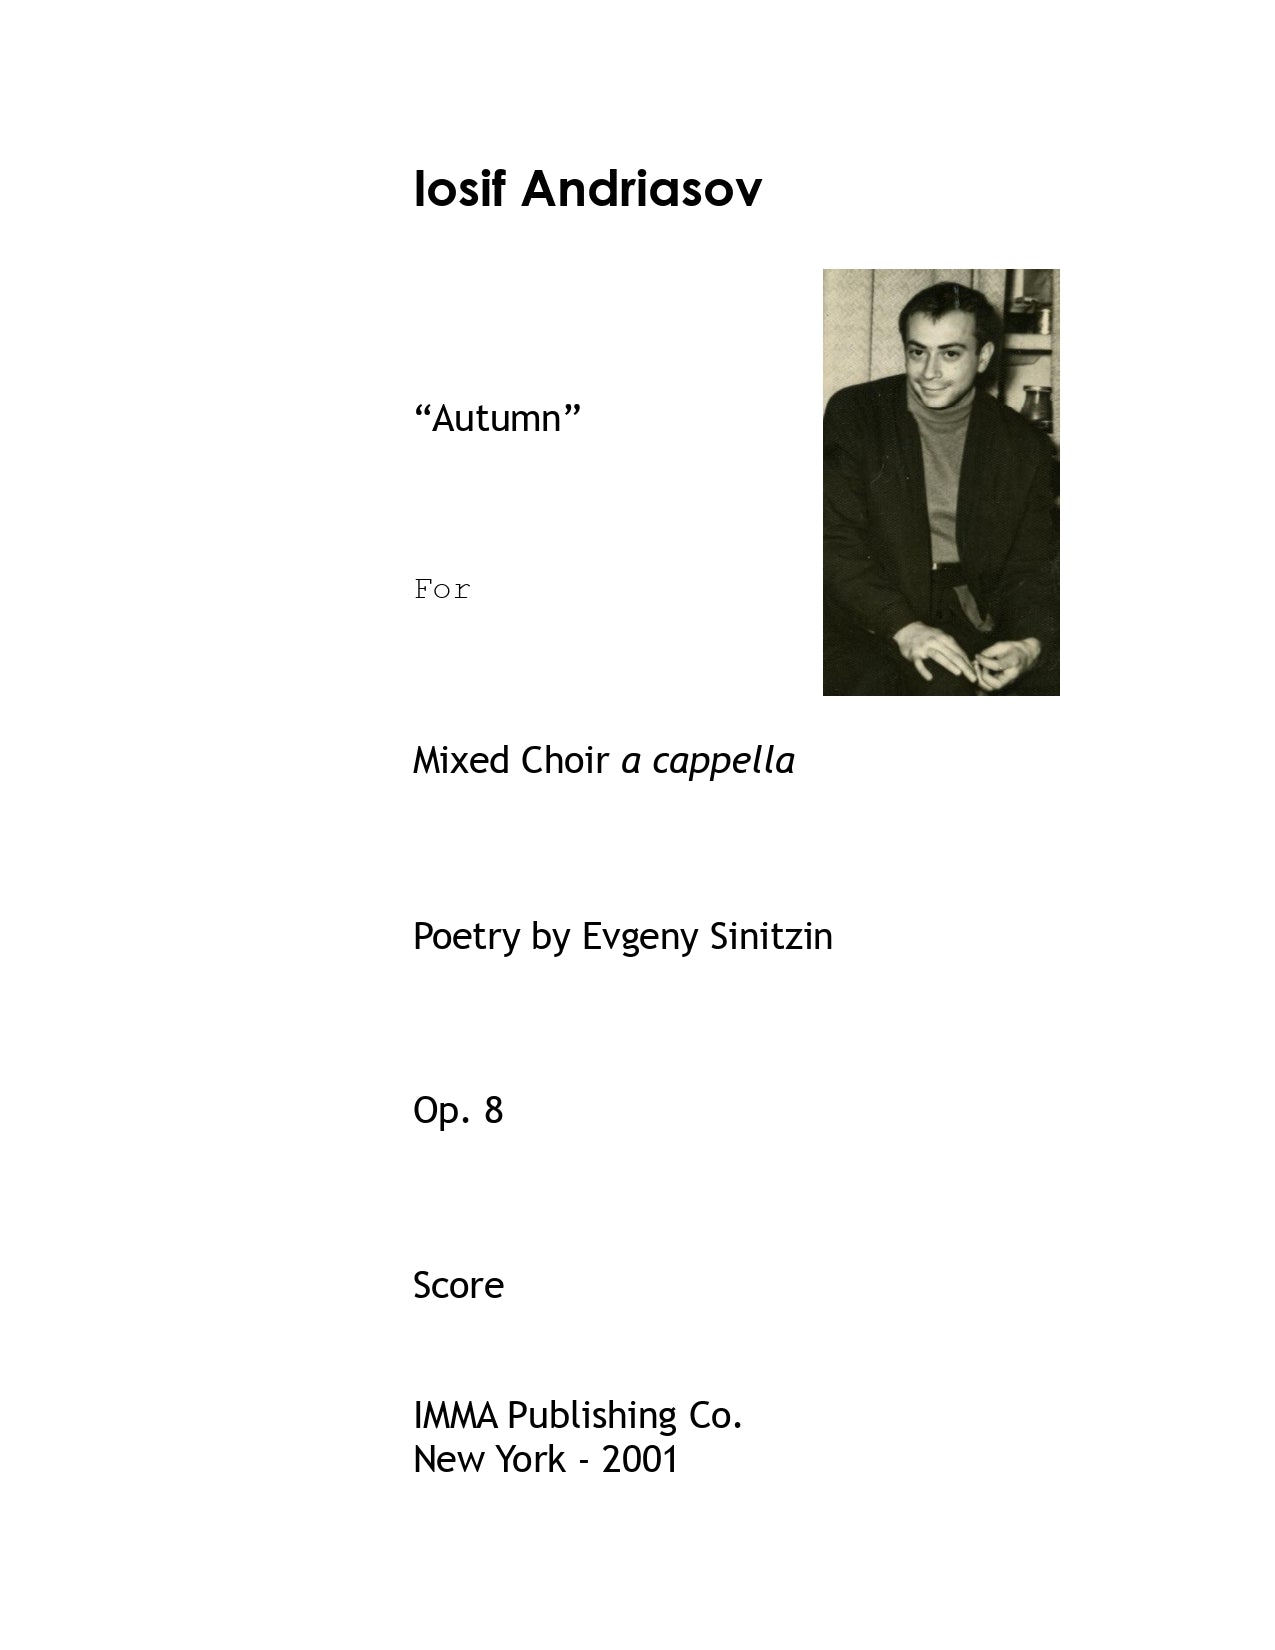 020. Iosif Andriasov: "Autumn", Op. 8 for Mixed Choir a cappella.